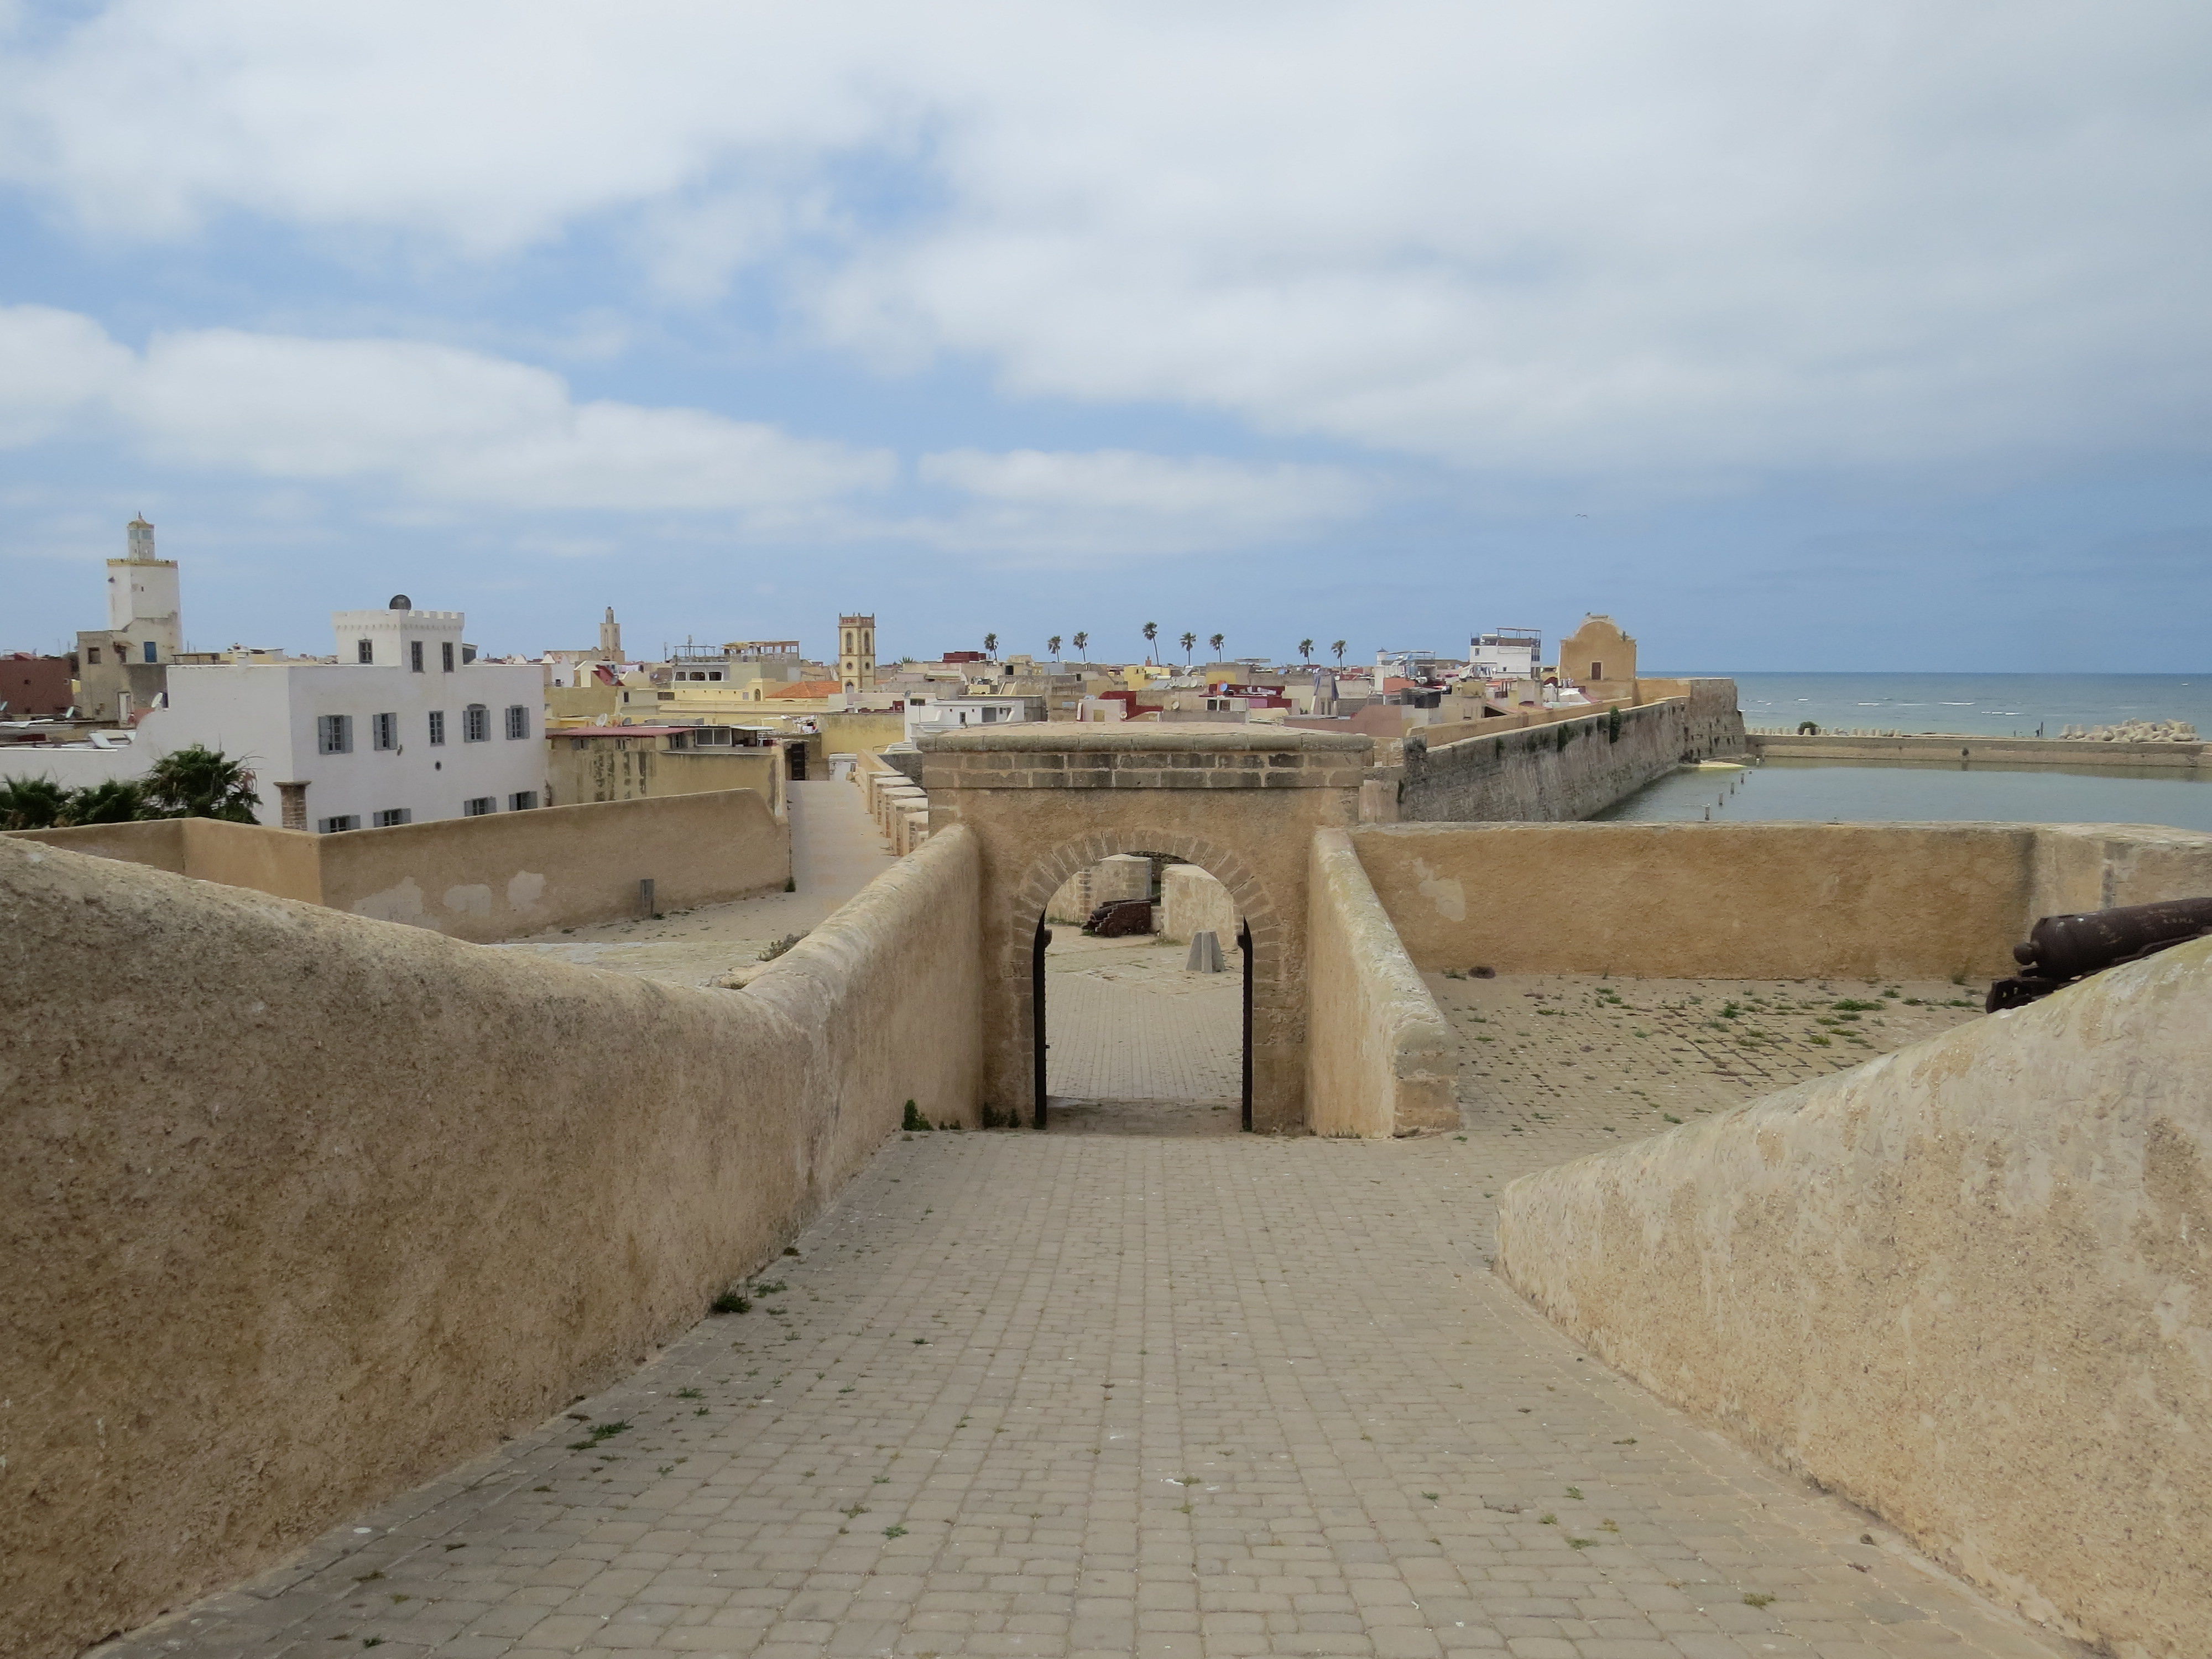 Les remparts de la citadelle fortifiée d'El Jadida sur la côte Atlantique Marocaine